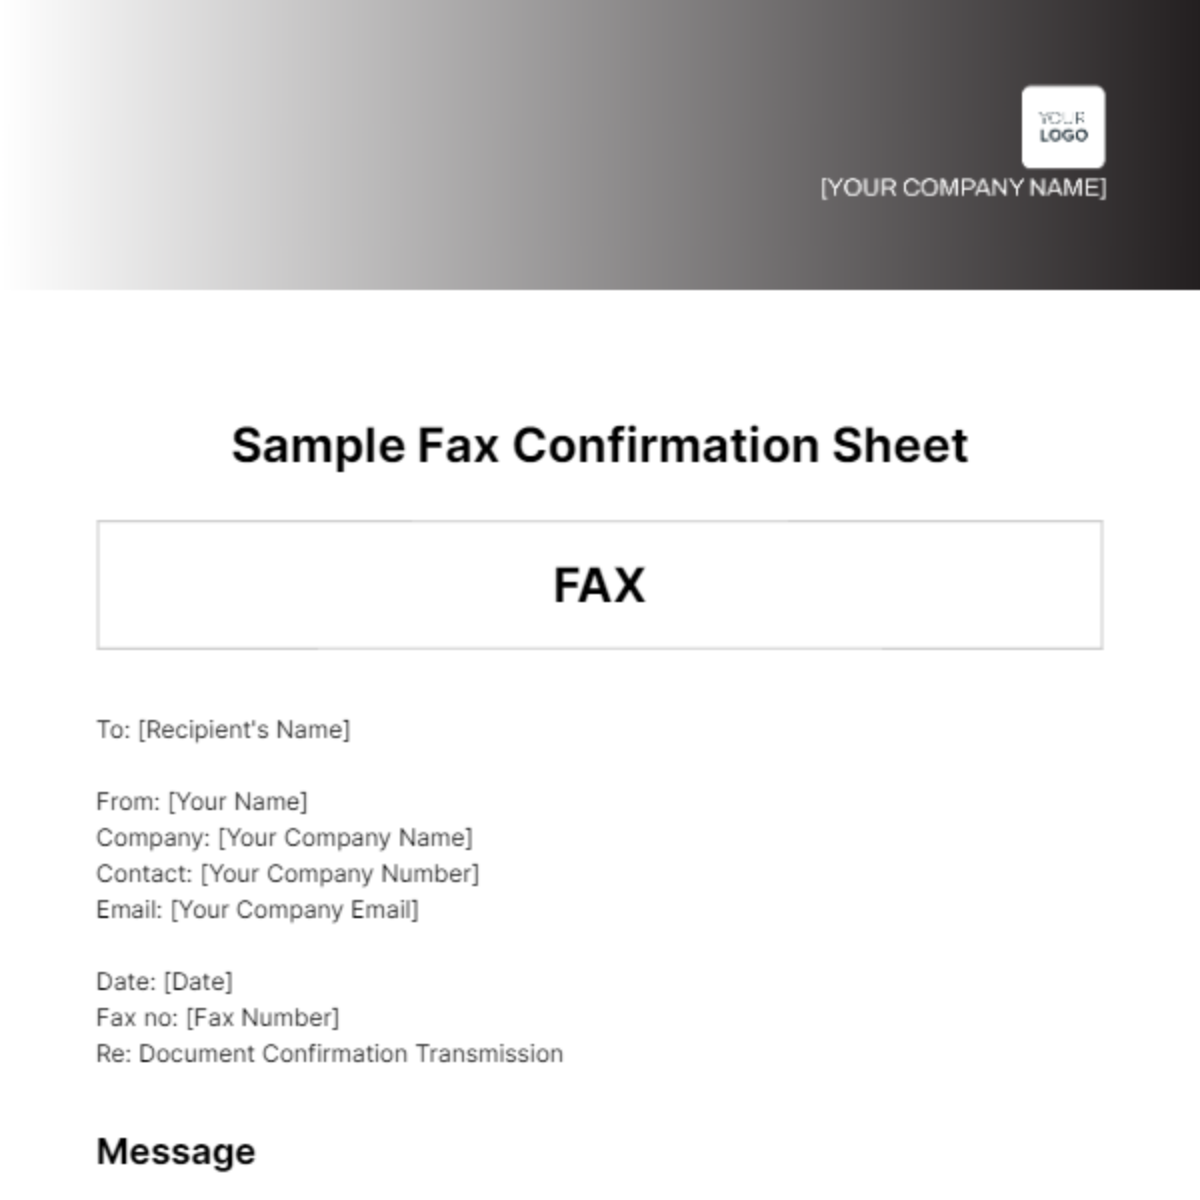 Sample Fax Confirmation Sheet